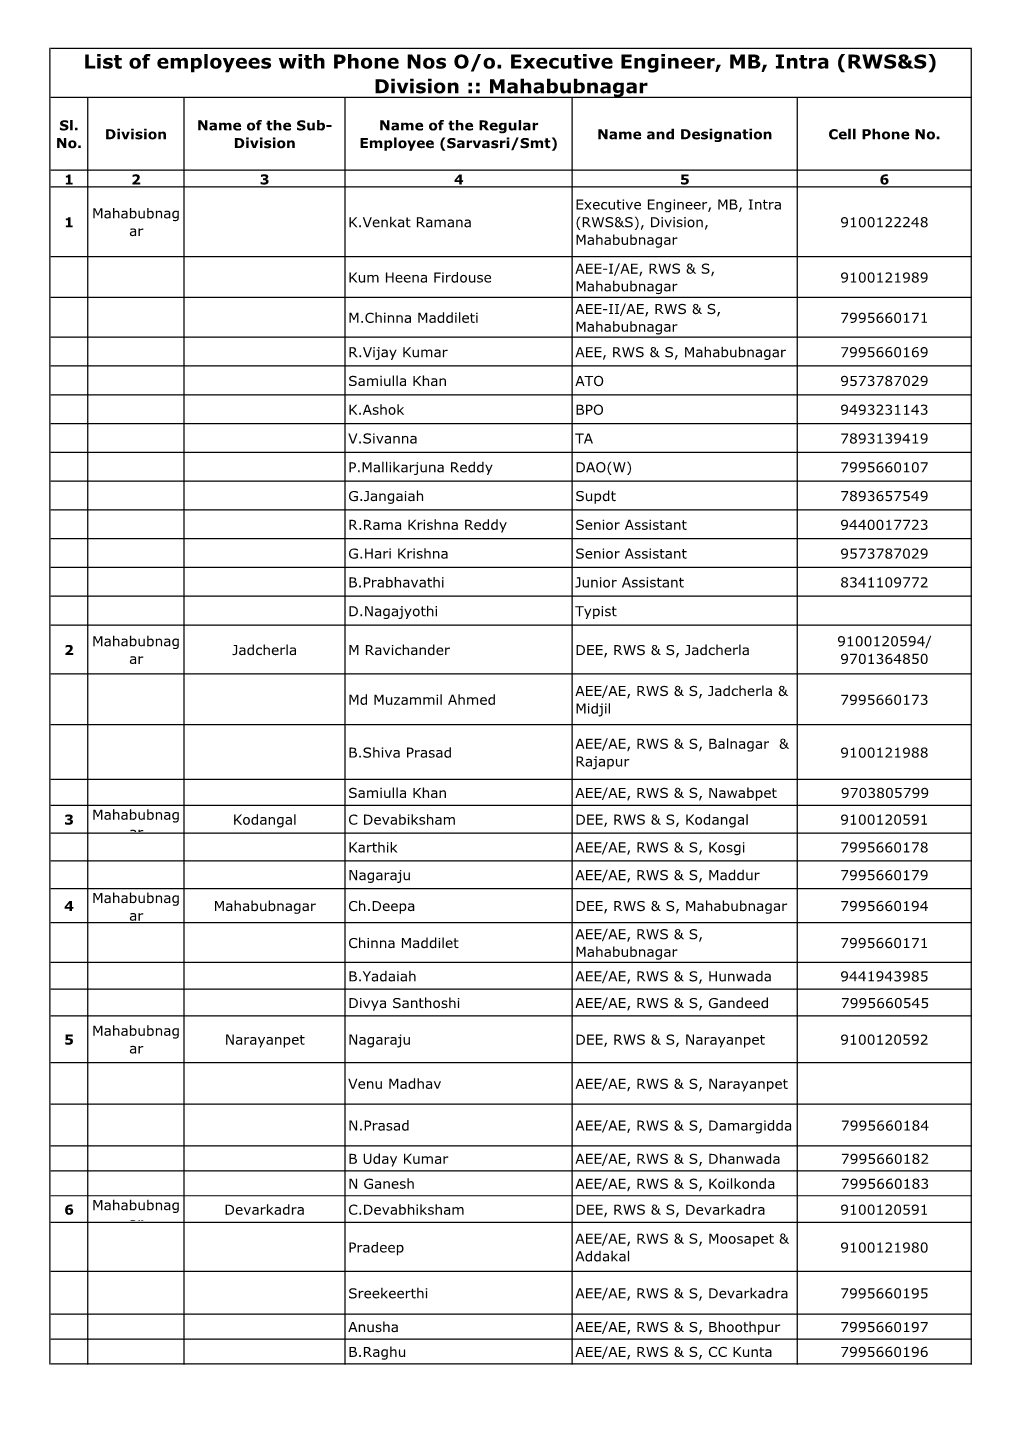 List of Employees with Phone Nos O/O. Executive Engineer, MB, Intra (RWS&S) Division :: Mahabubnagar